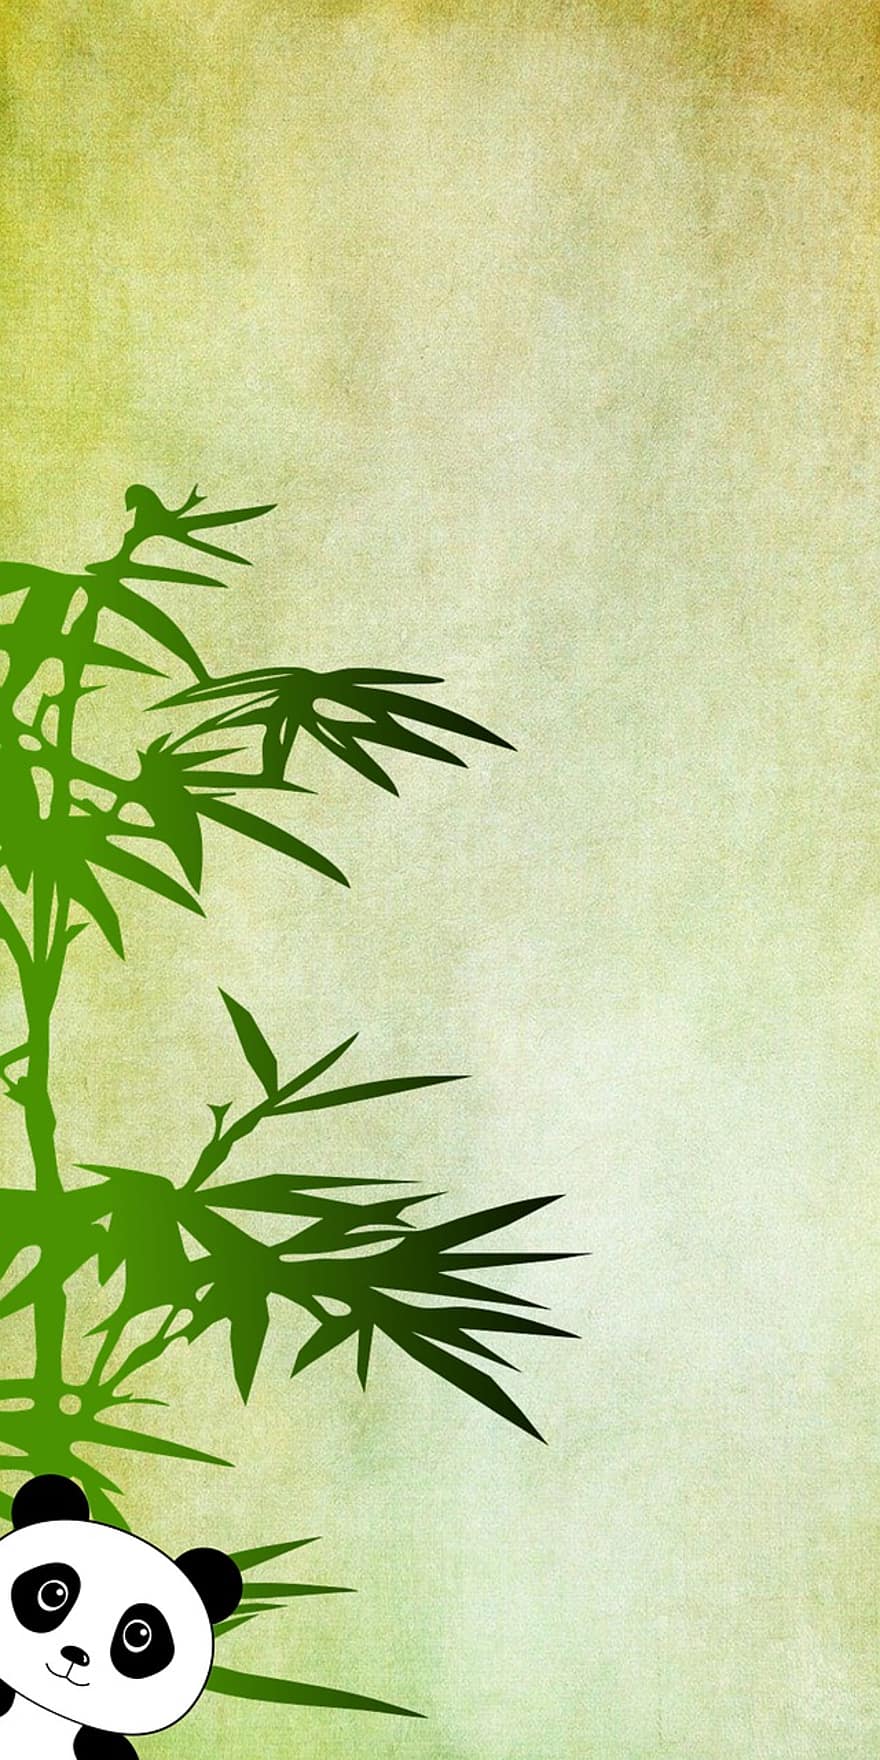 Bamboo, Panda, Art, Design, Drawing, Sketch, Iphone Wallpaper, backgrounds, illustration, green color, leaf